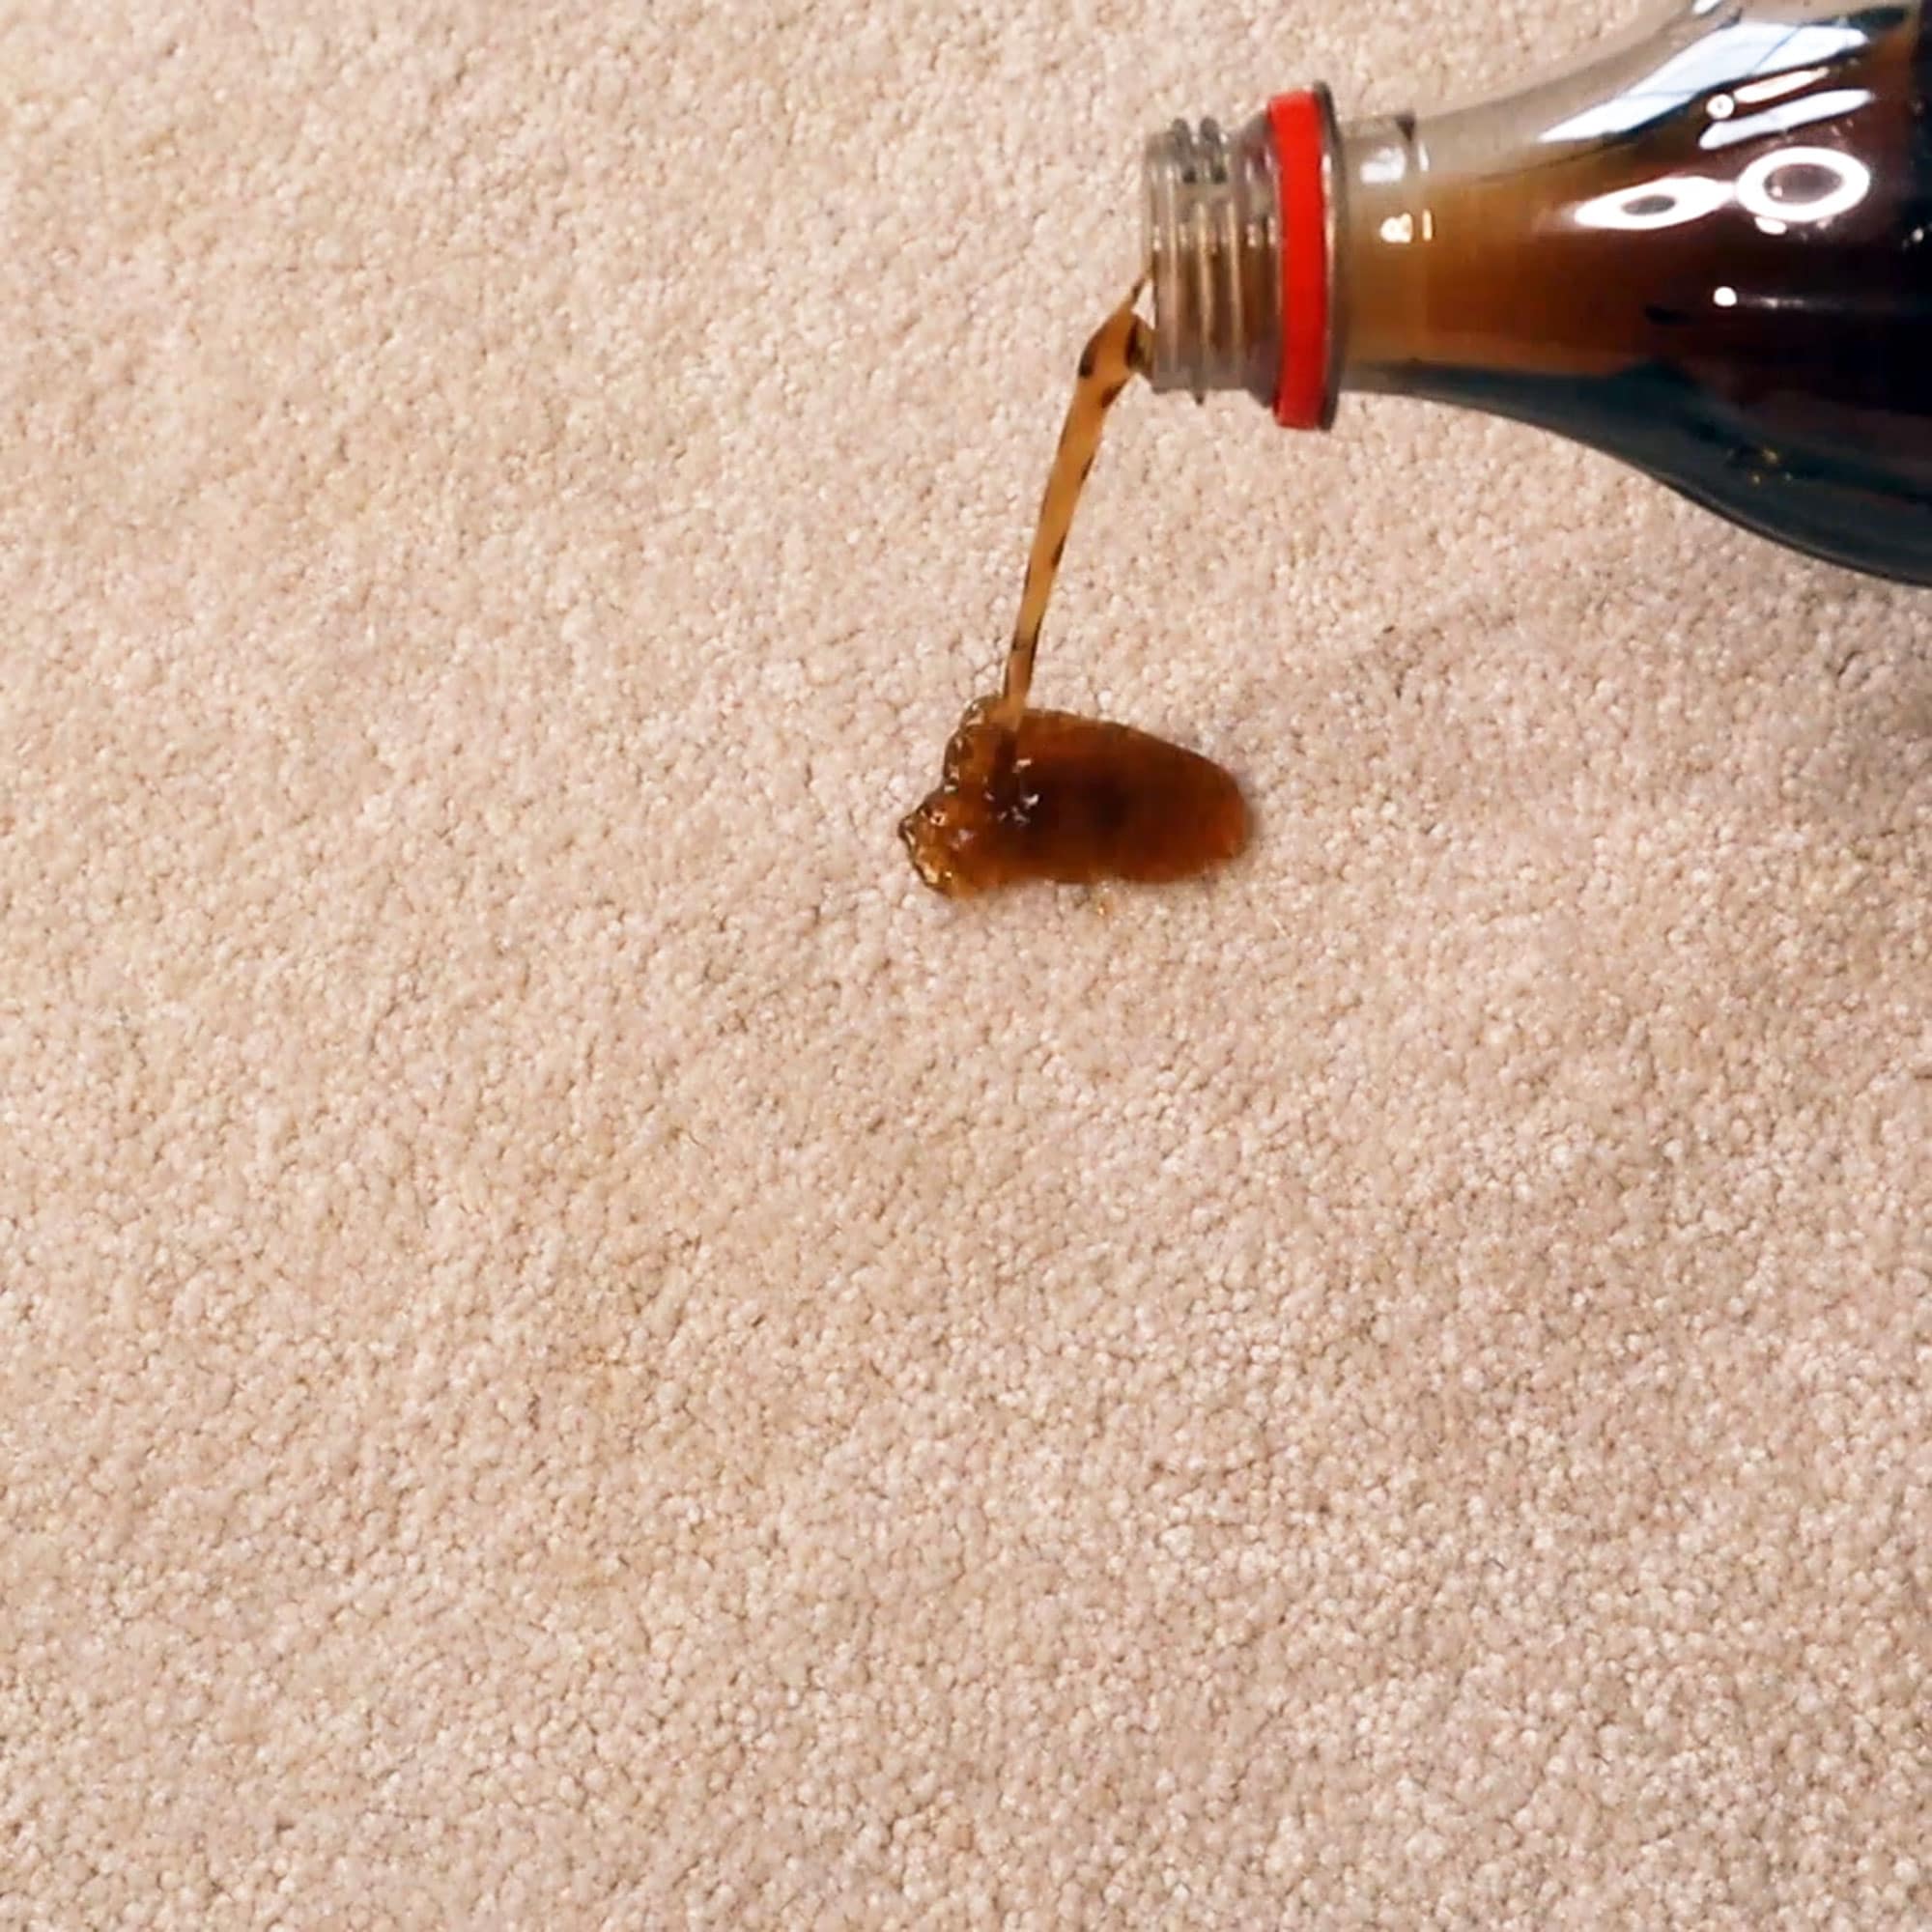 coca cola being spilled on carpet